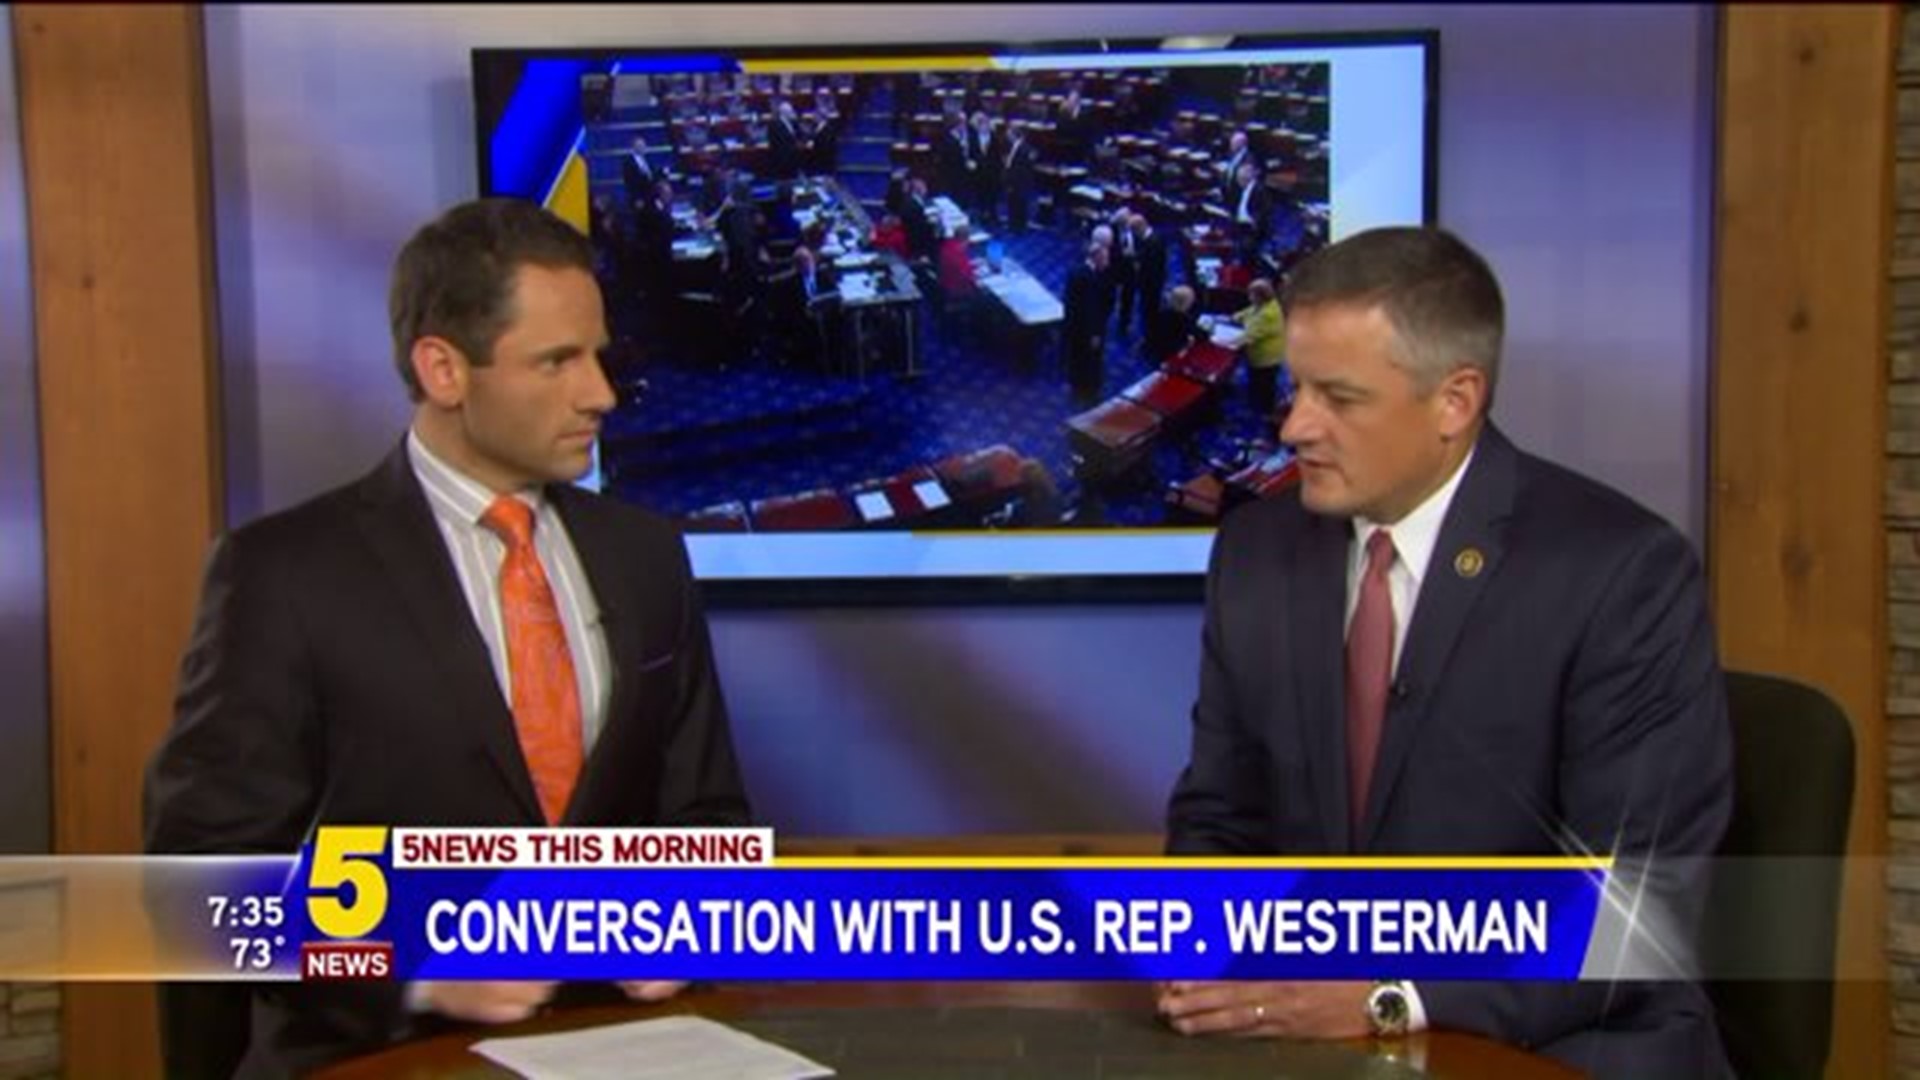 Conversation With U.S. Rep Westerman